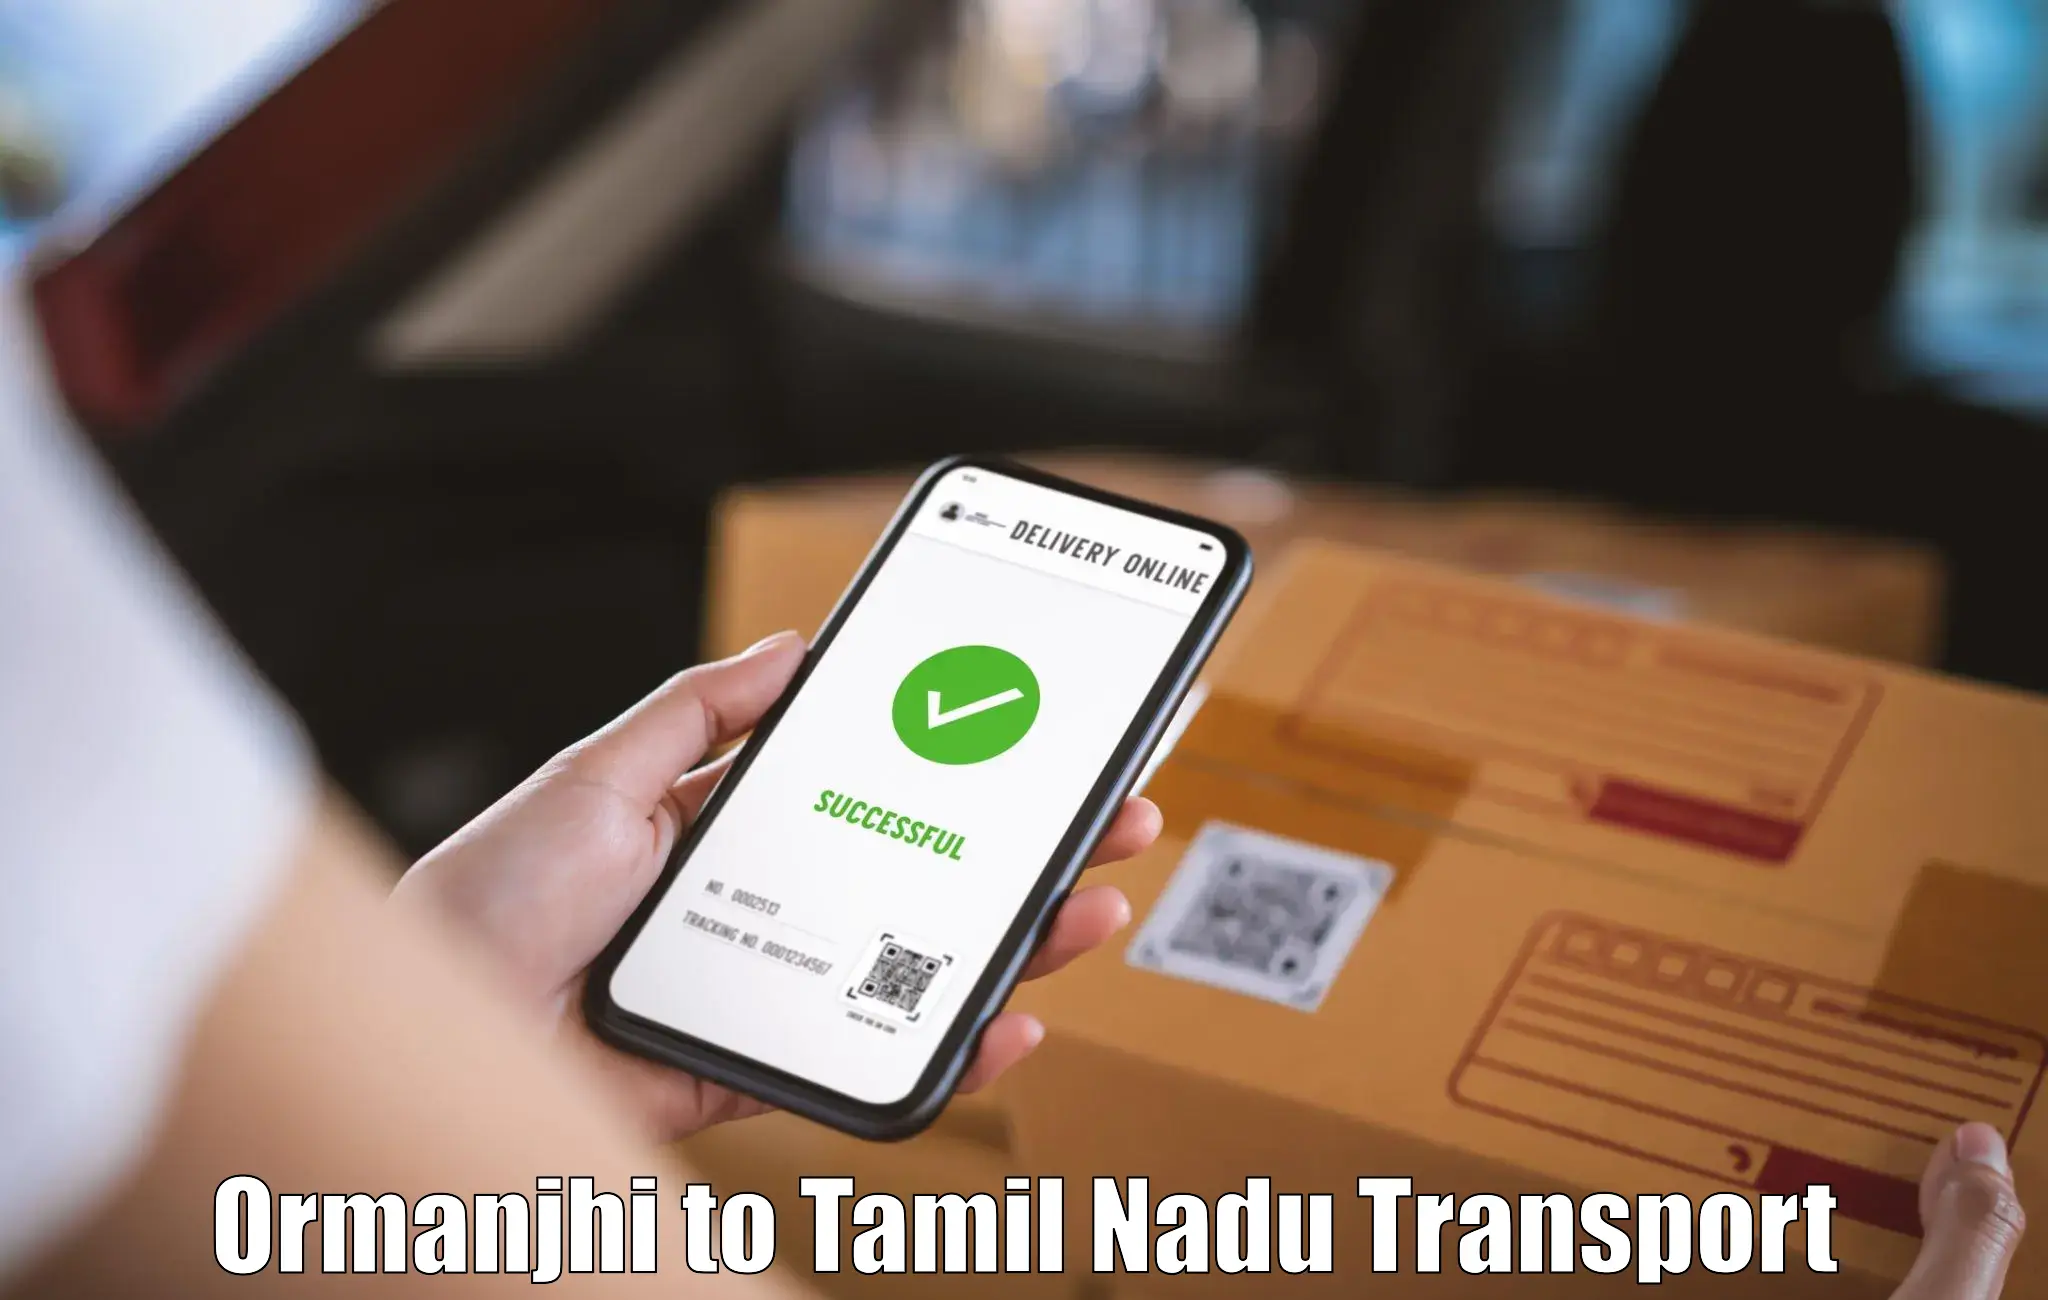 Transport services Ormanjhi to Ramanathapuram